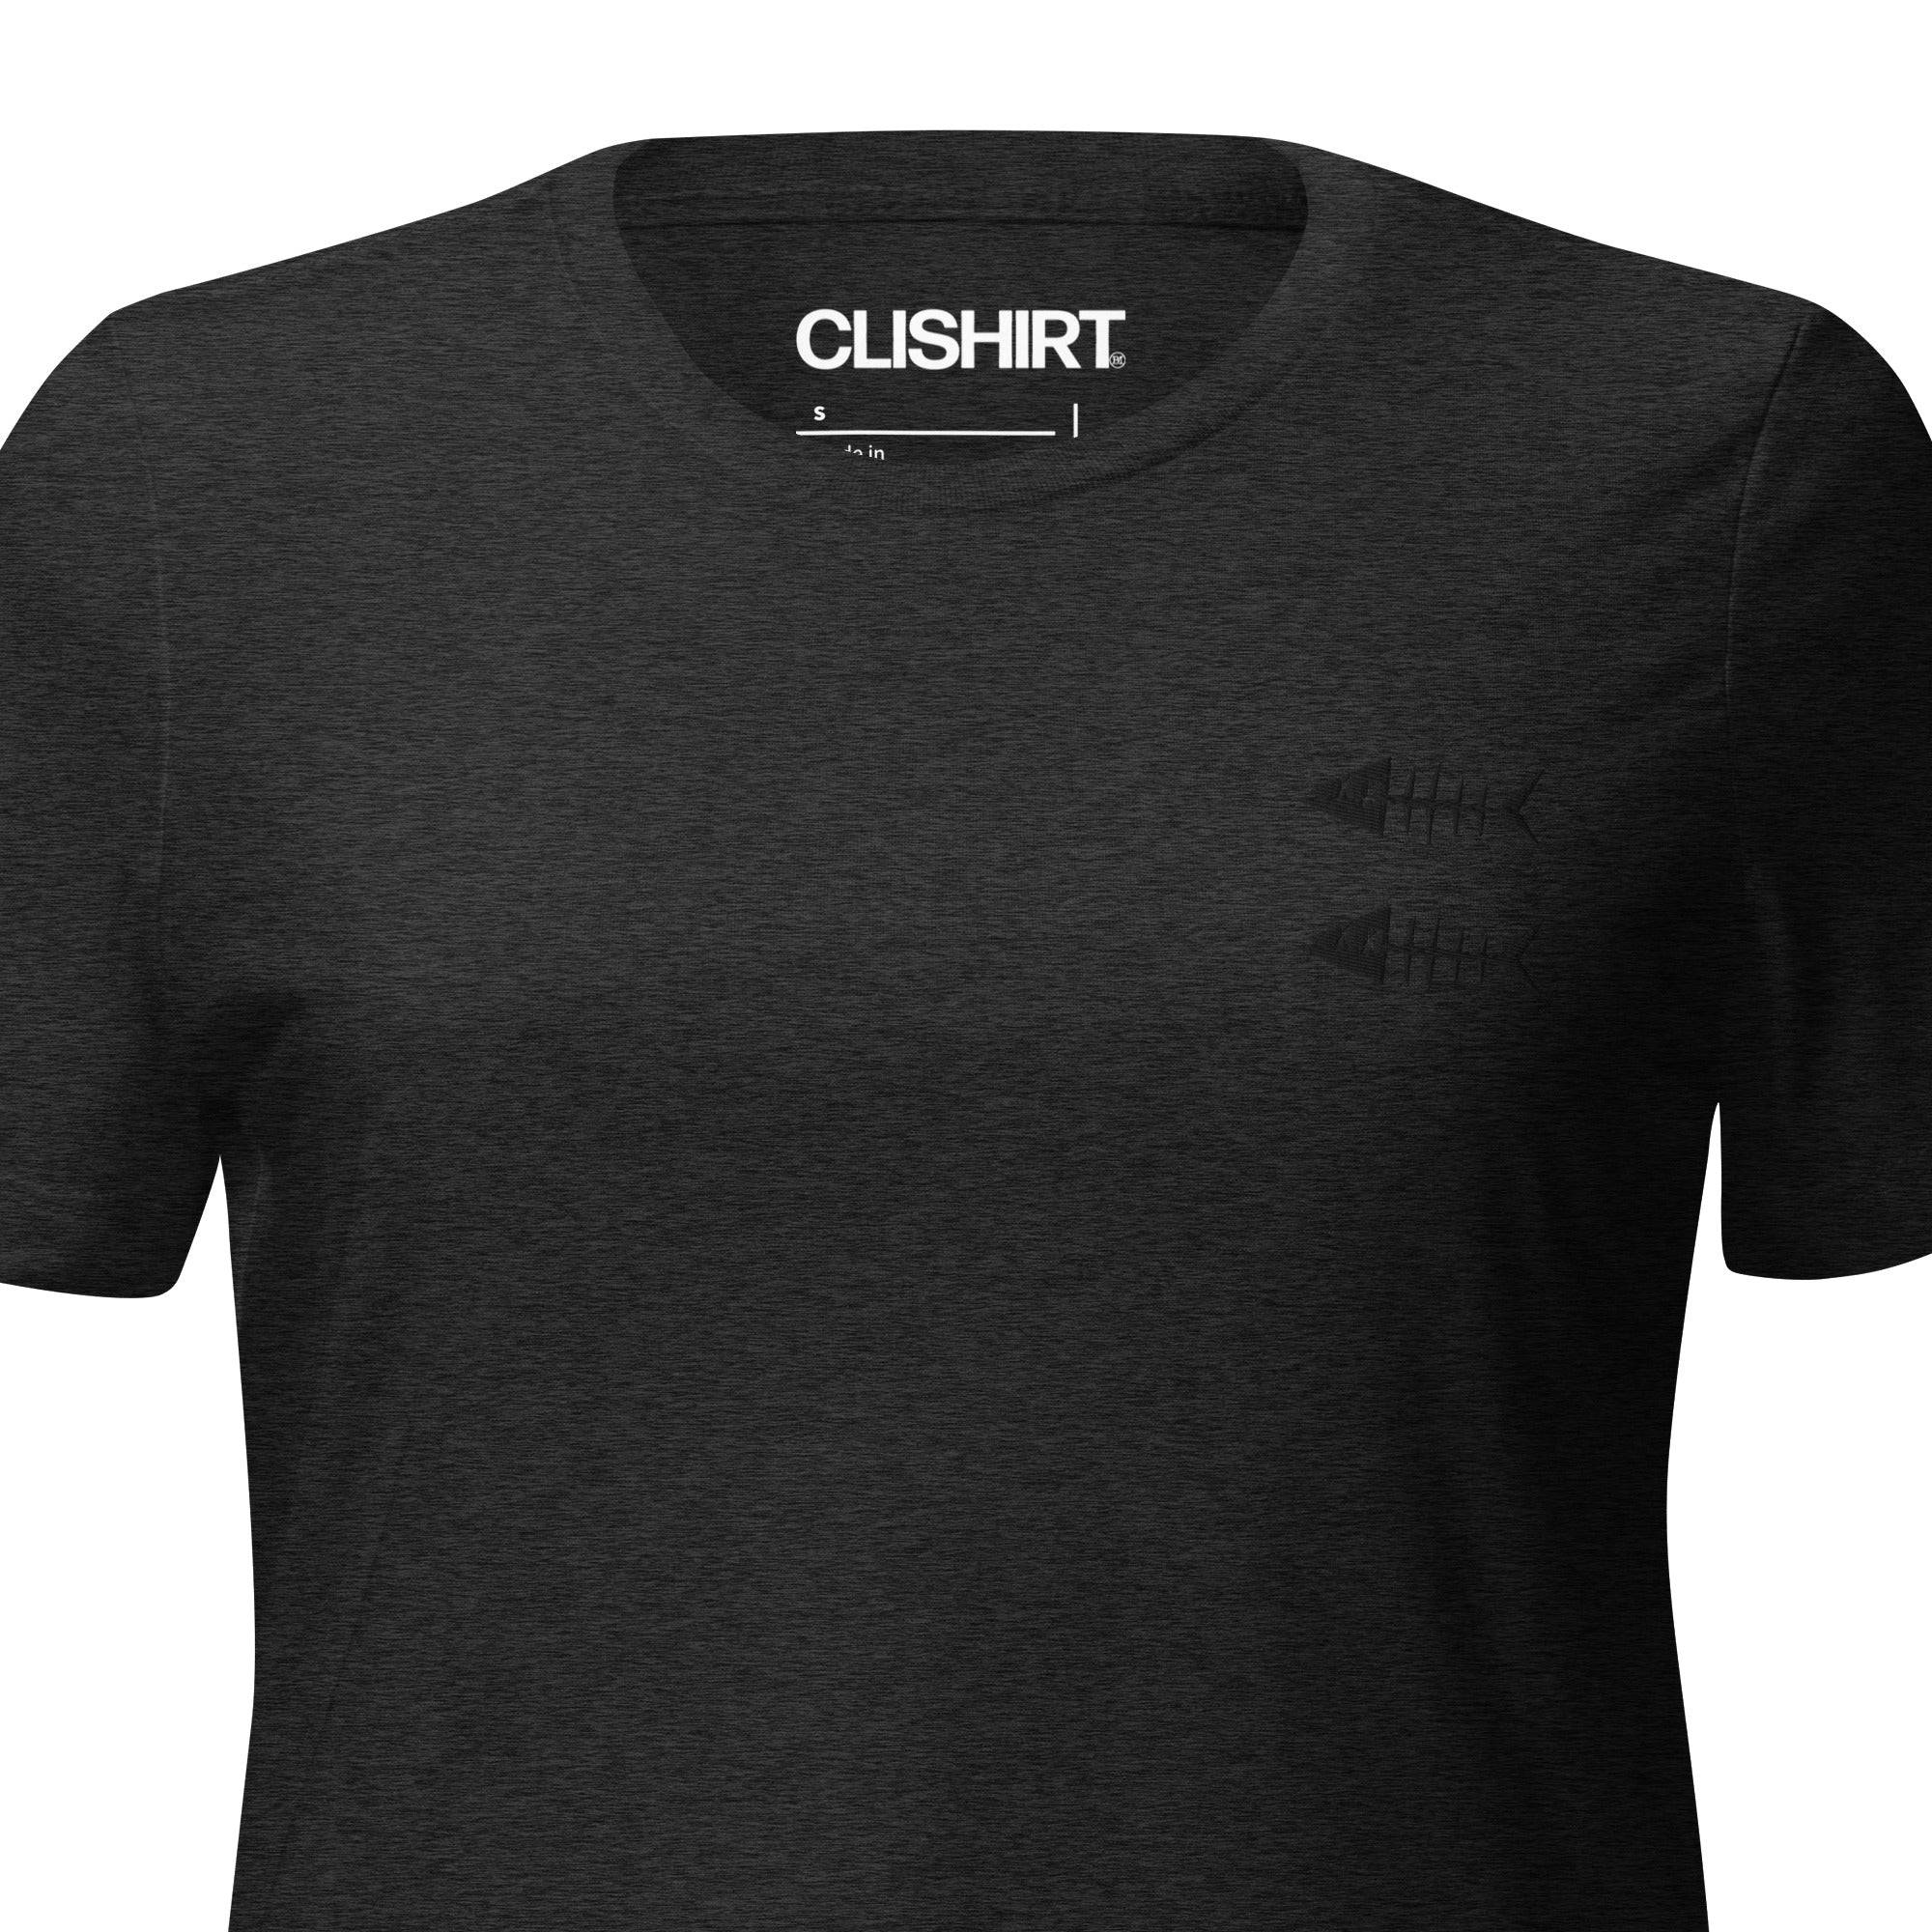 Clishirt© Embroided Black Fish on Black Women’s relaxed tri-blend t-shirt